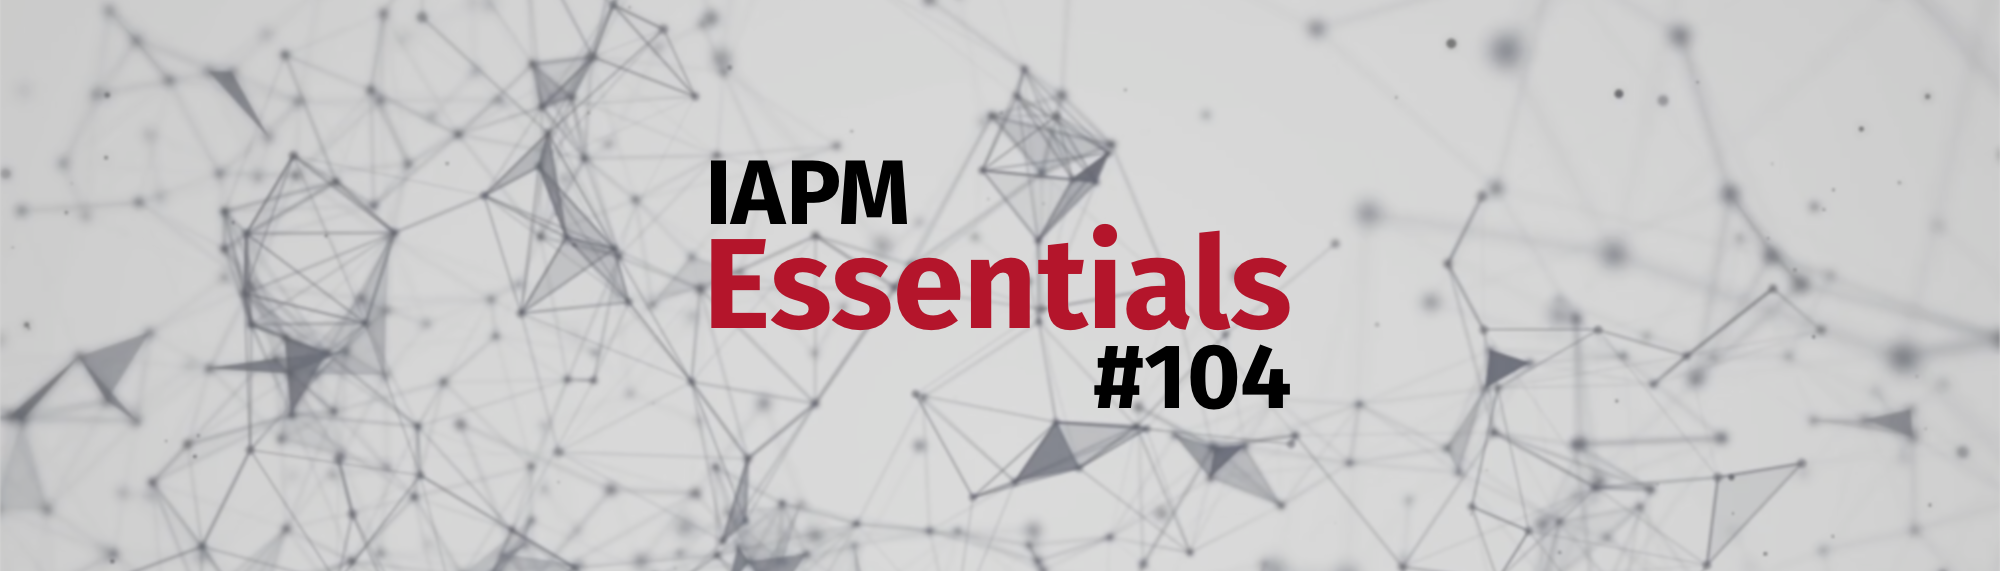 IAPM Essentials #104 - PM Neuigkeiten | IAPM